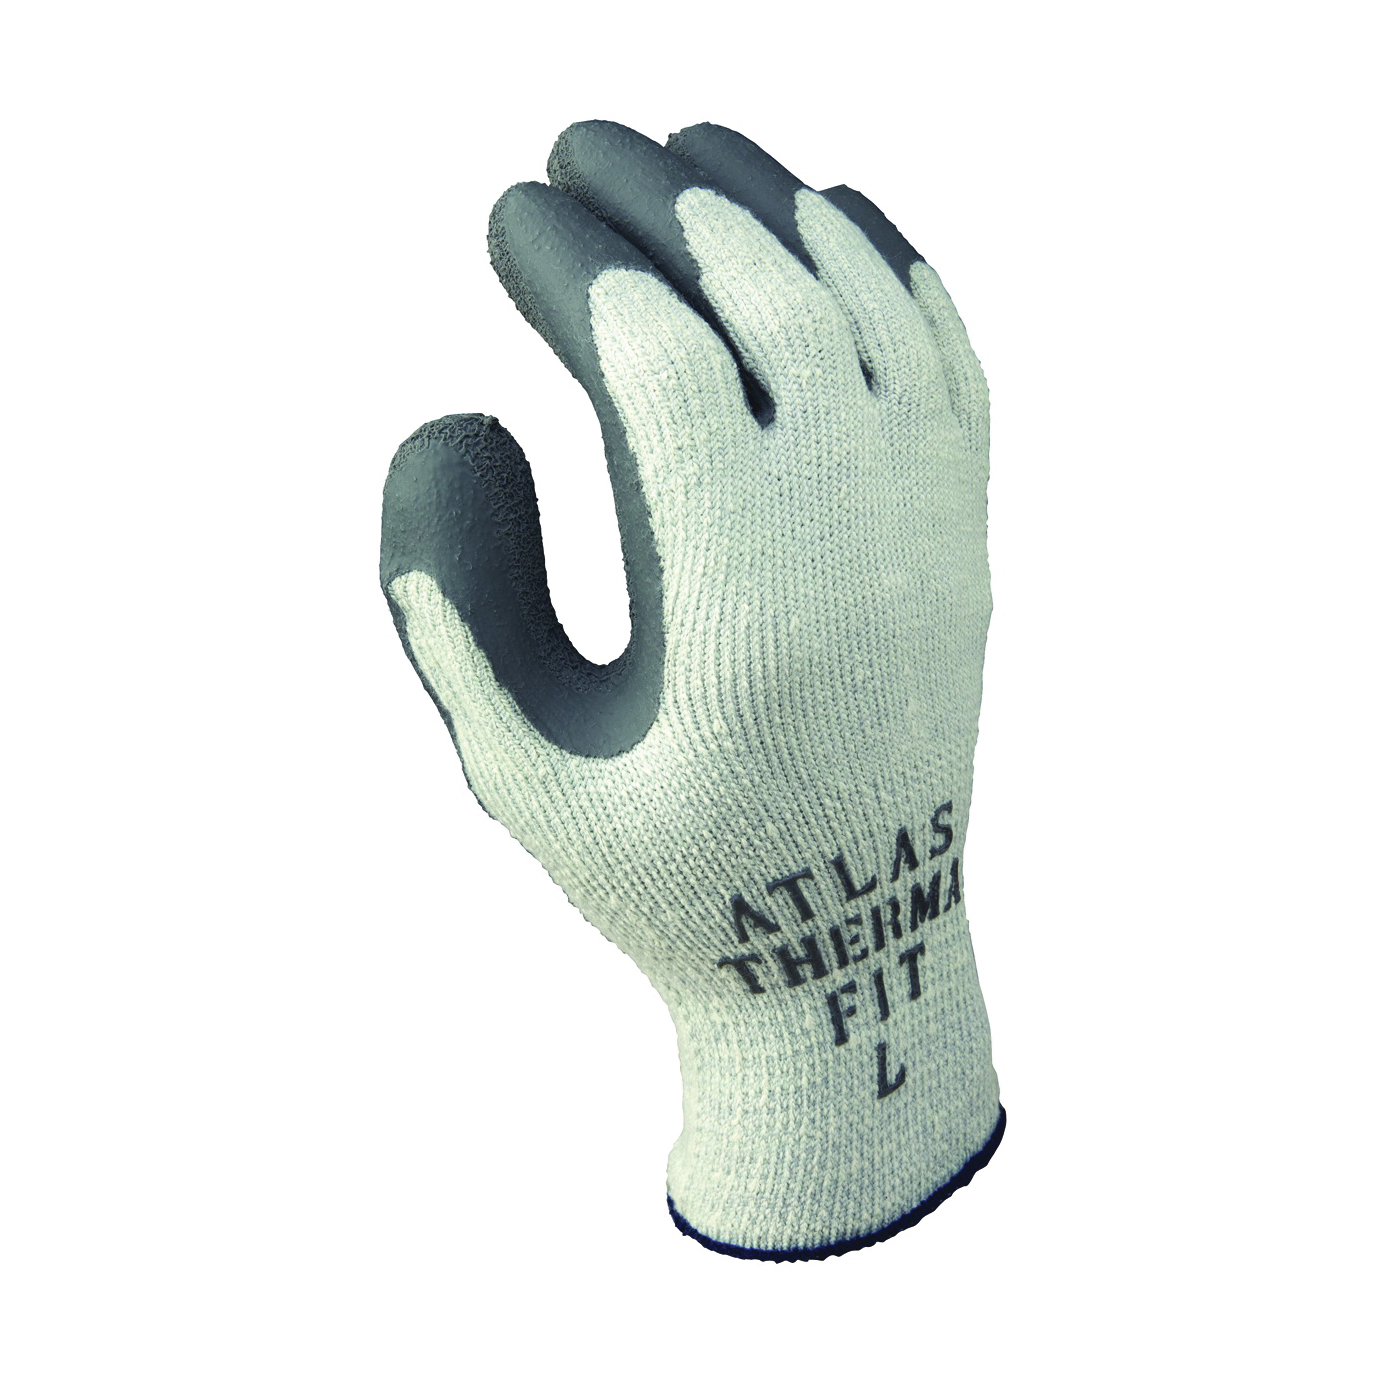 Showa 330XL-10 Coated Gloves, Black/Gray, XL